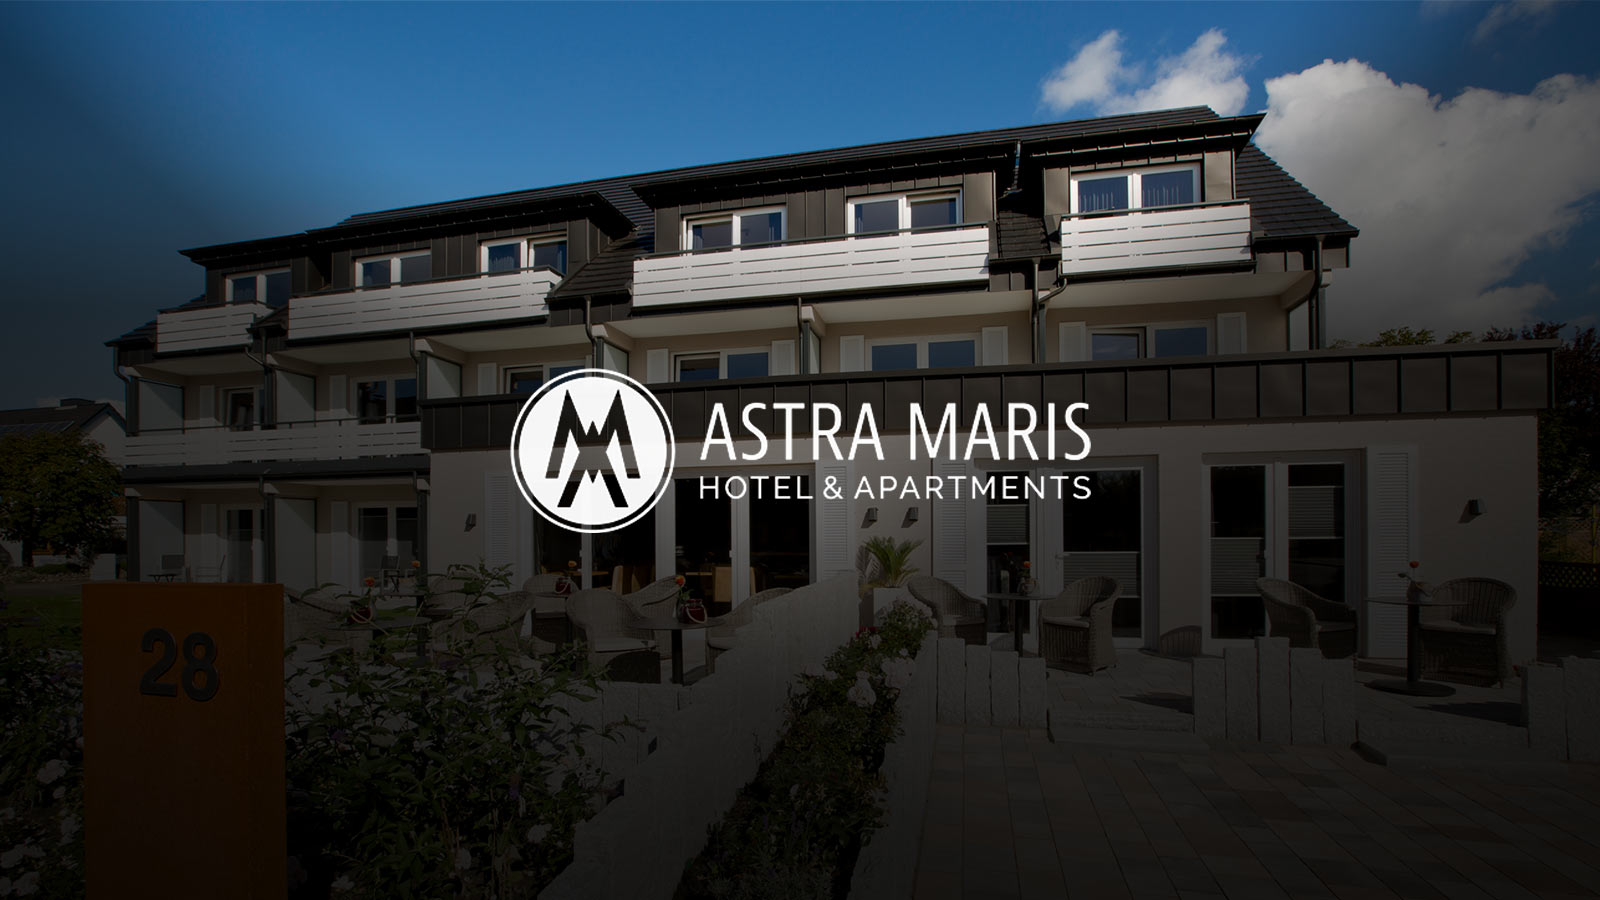 Astra-Maris-Hotel-&-Apartments-logo